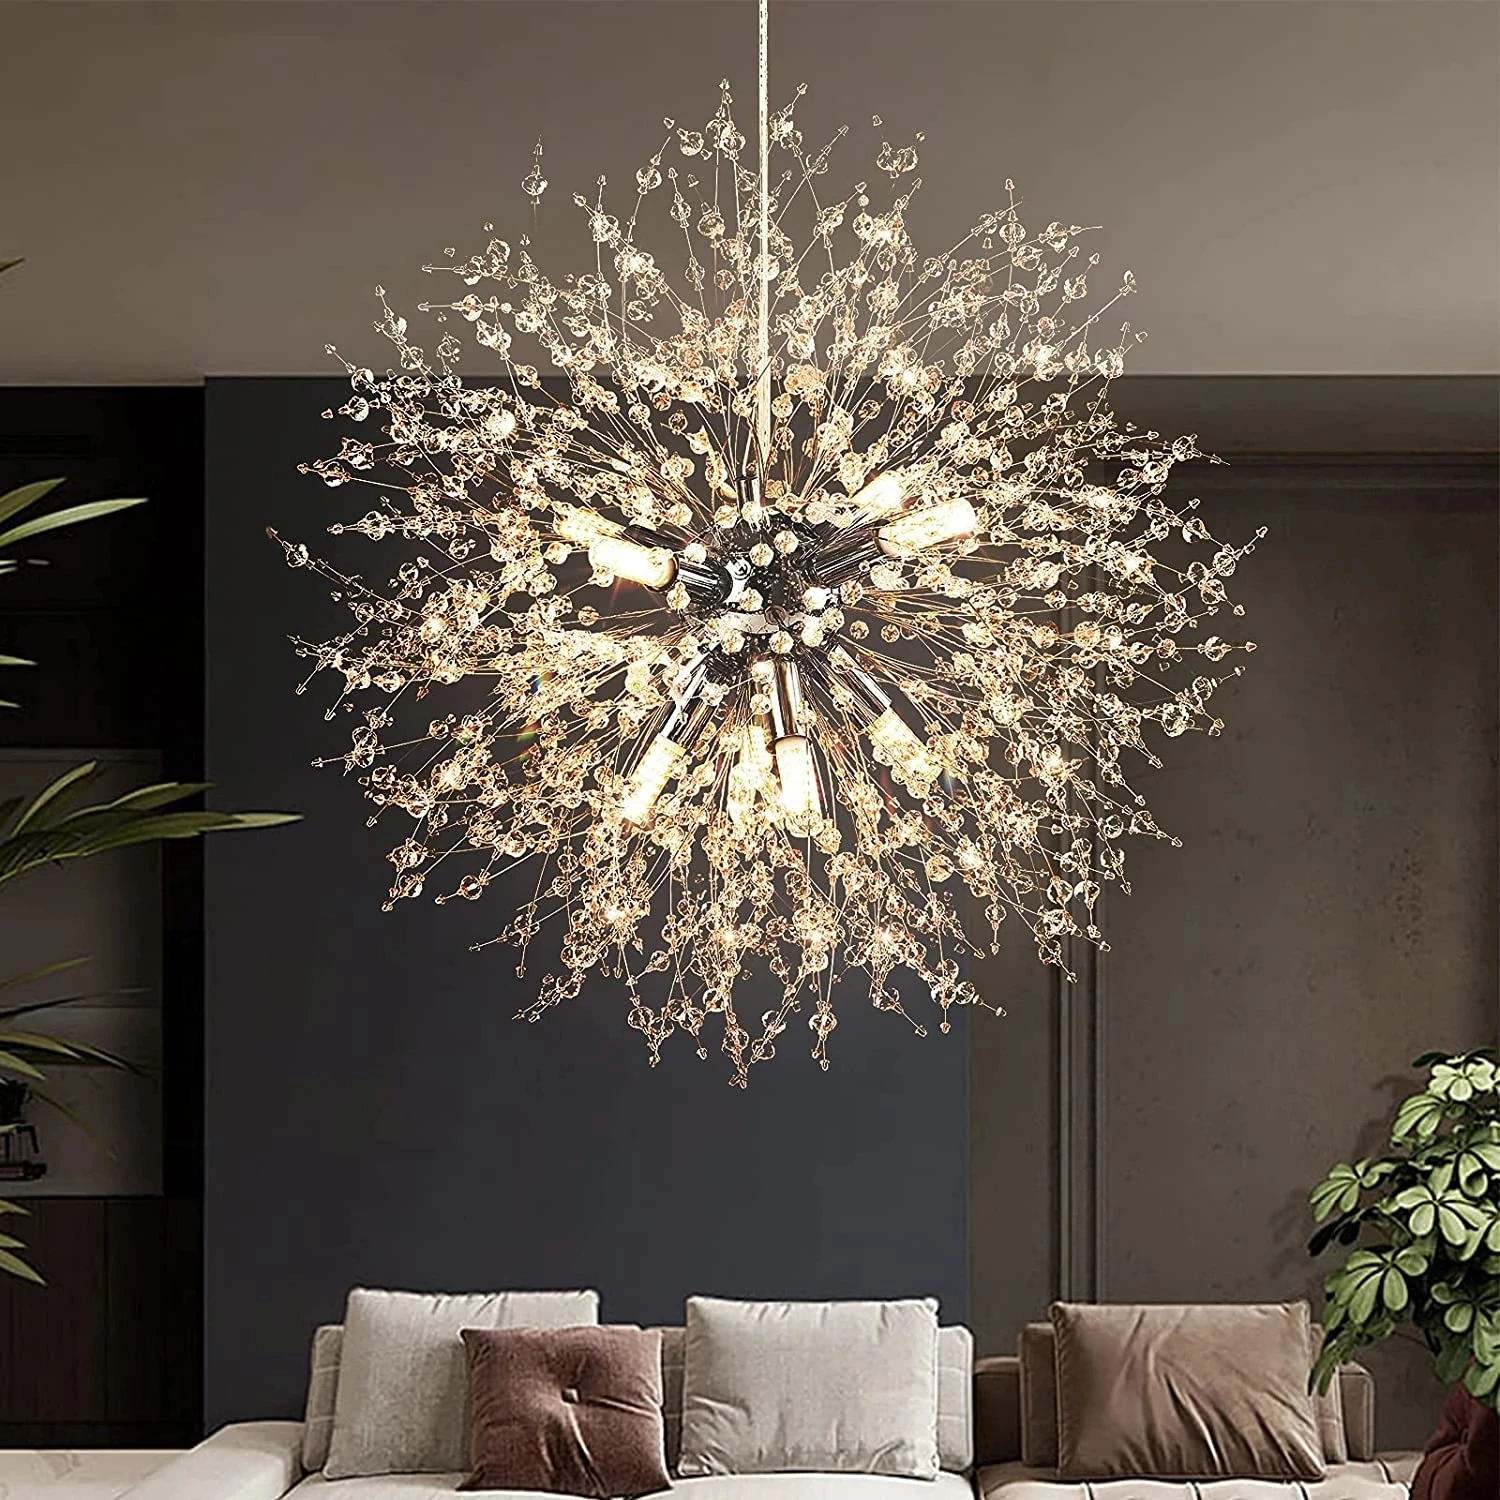 Ndelion chandelier lighting pendant lamp for living room dining room home decoration wf thumb200